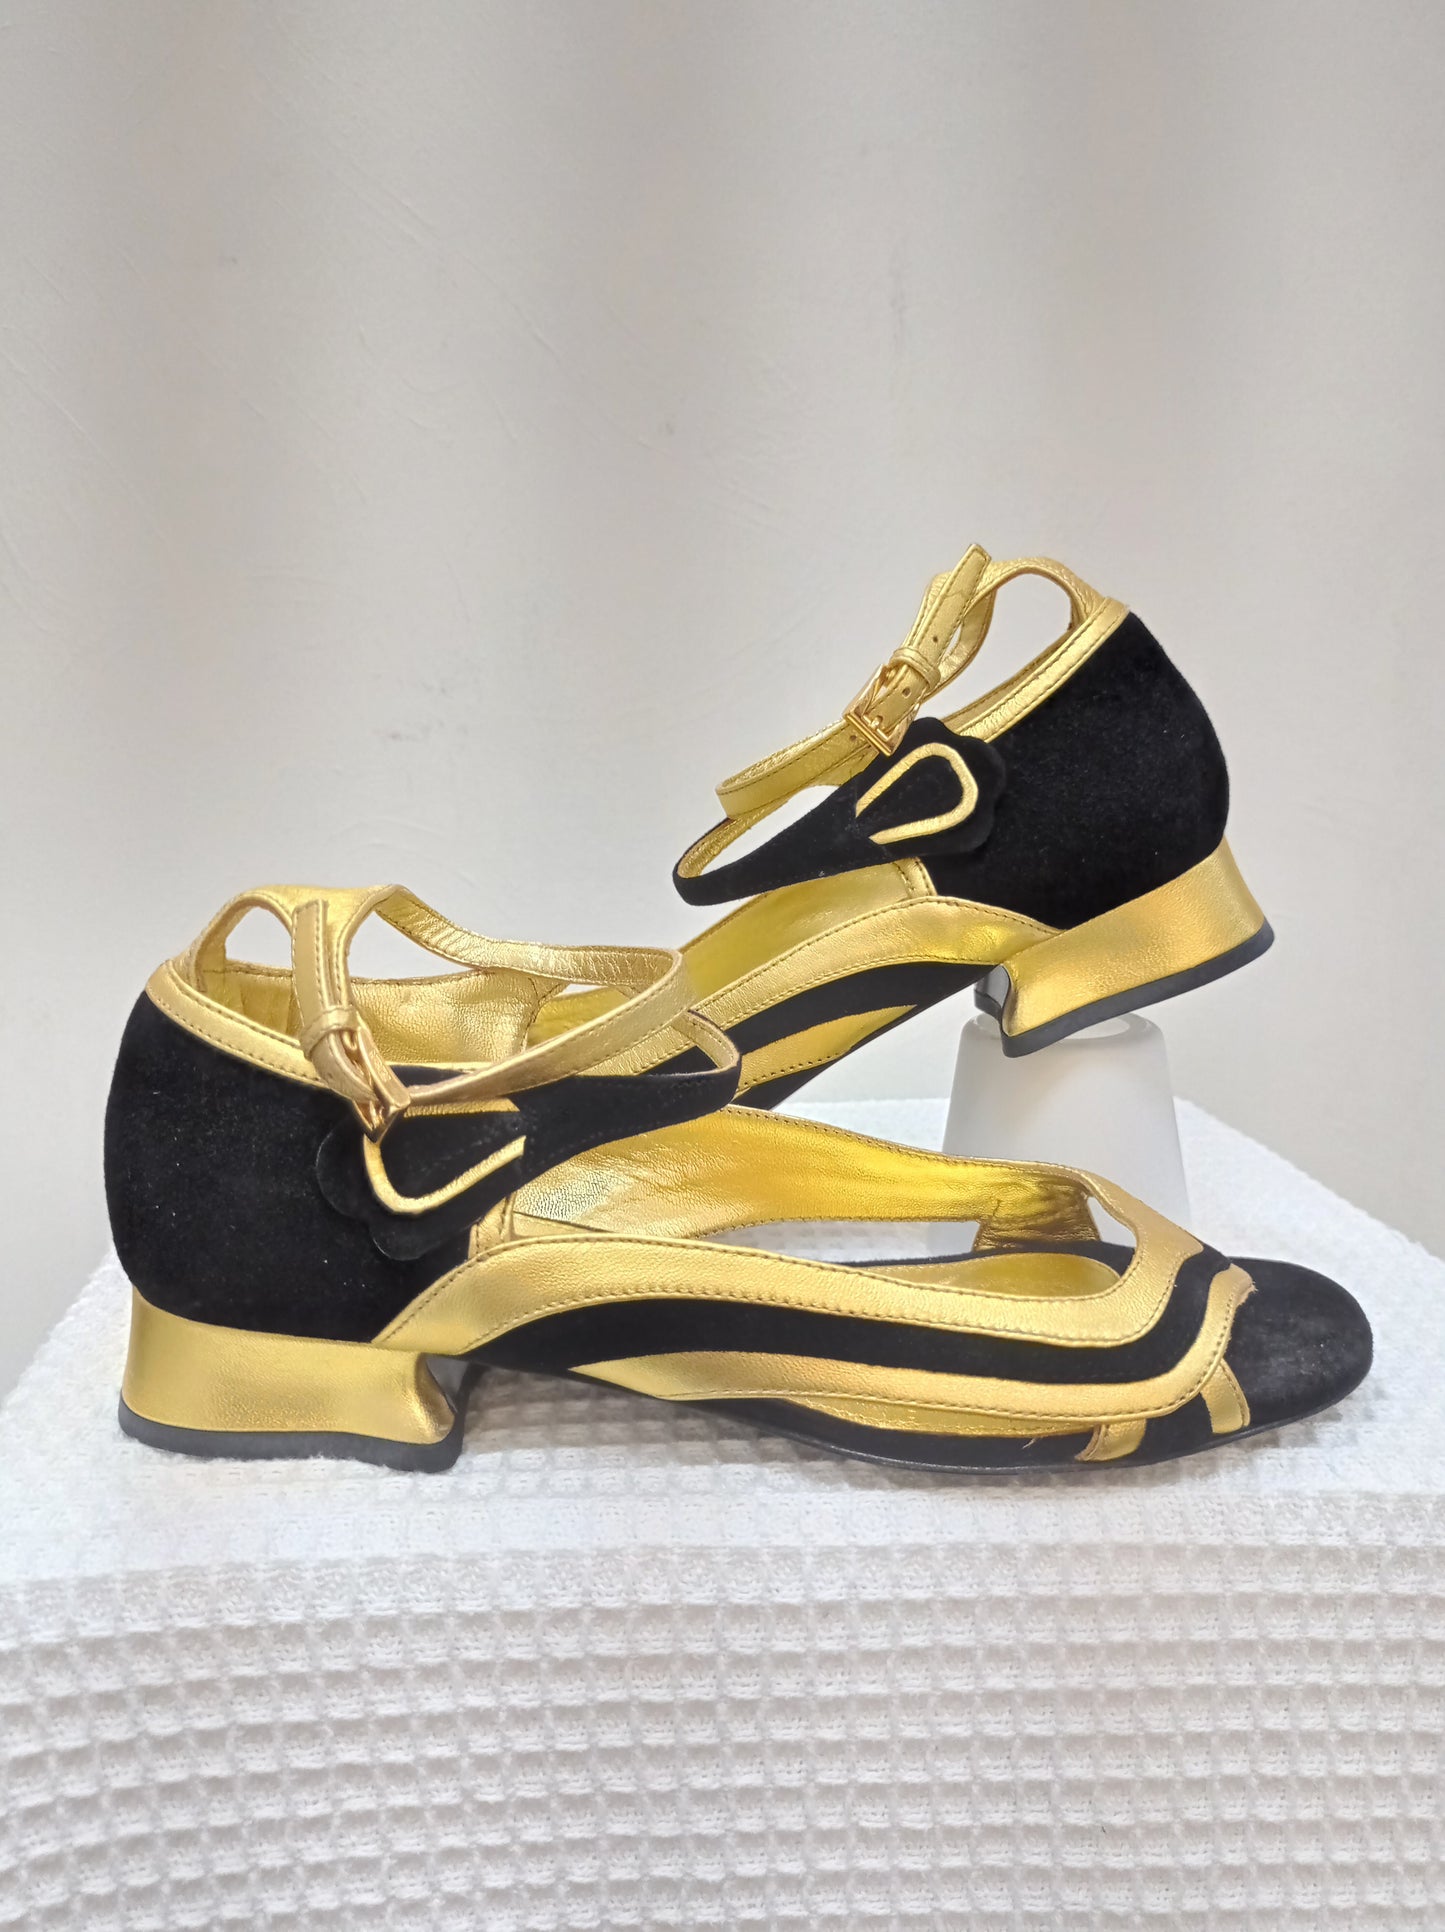 Prada Gold/Black Leather Sandals Size 6